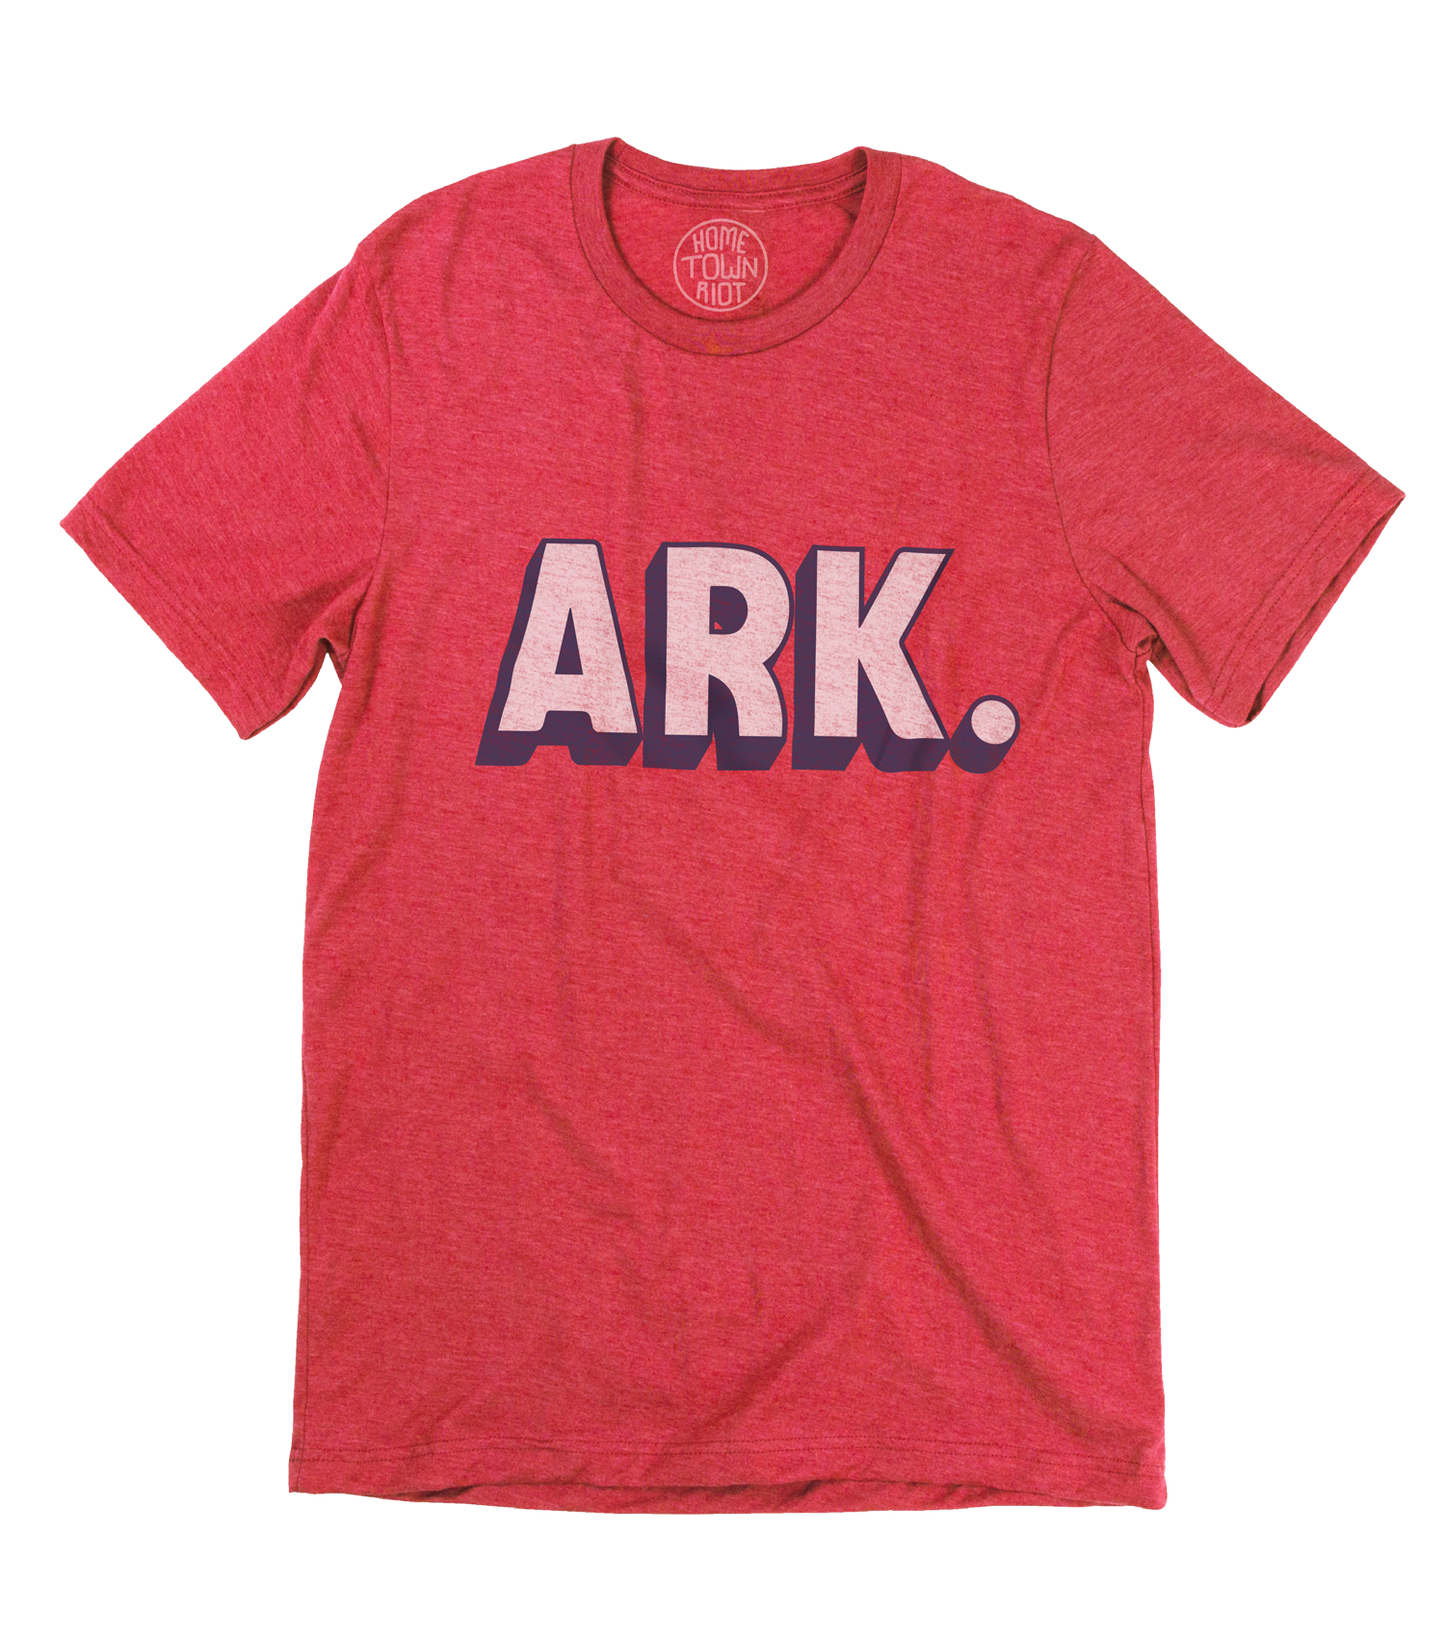 ARK. Shirt